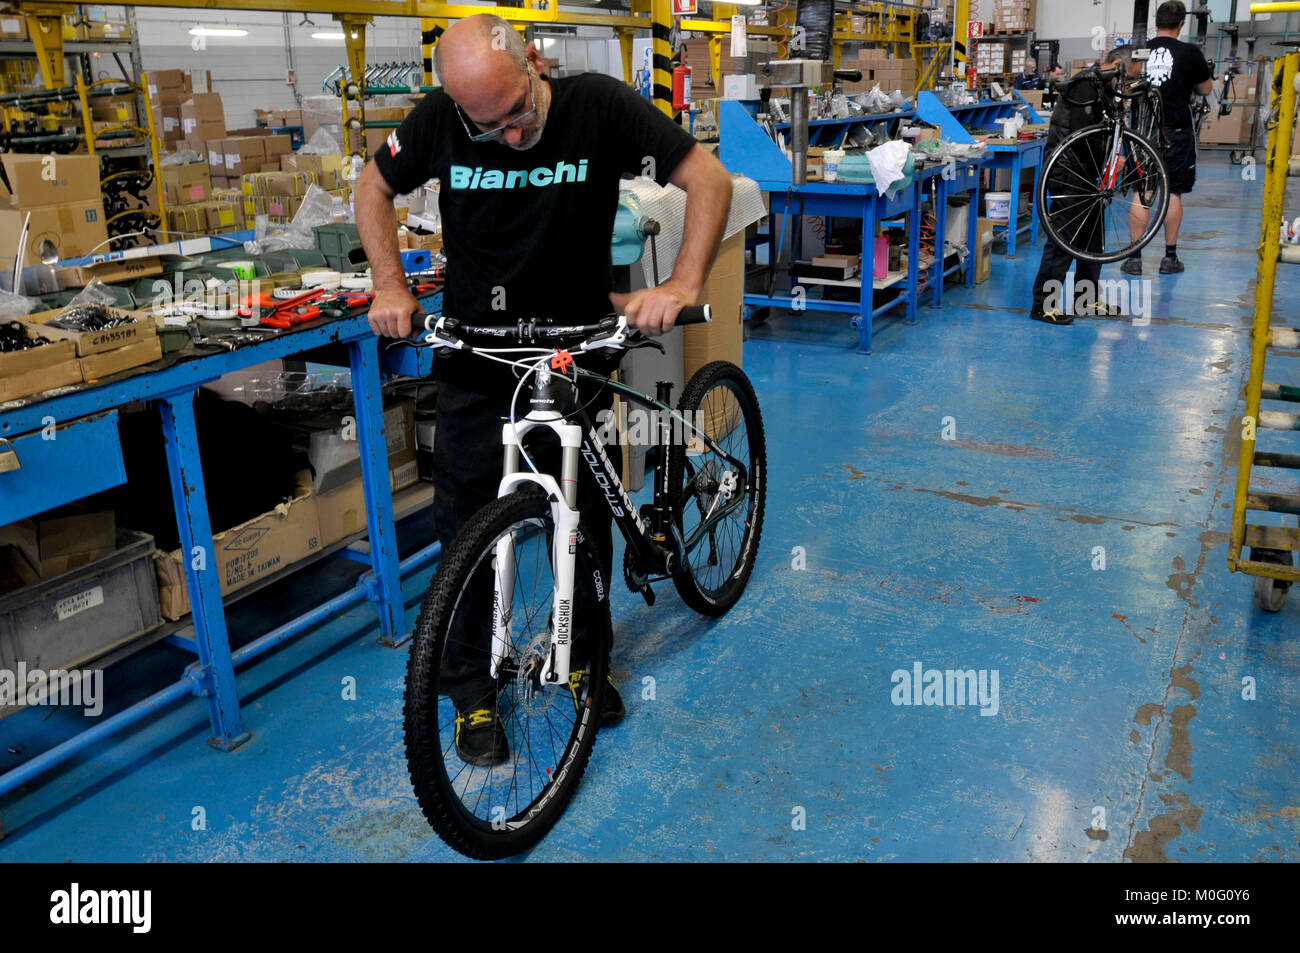 La industria "Biciclette Bianchi' - línea de montaje varios modelos de bicicletas - Treviglio - Italia © Crédito Marco Vacca/Sintesi/Sintesi/Alamy Fotografía de stock - Alamy